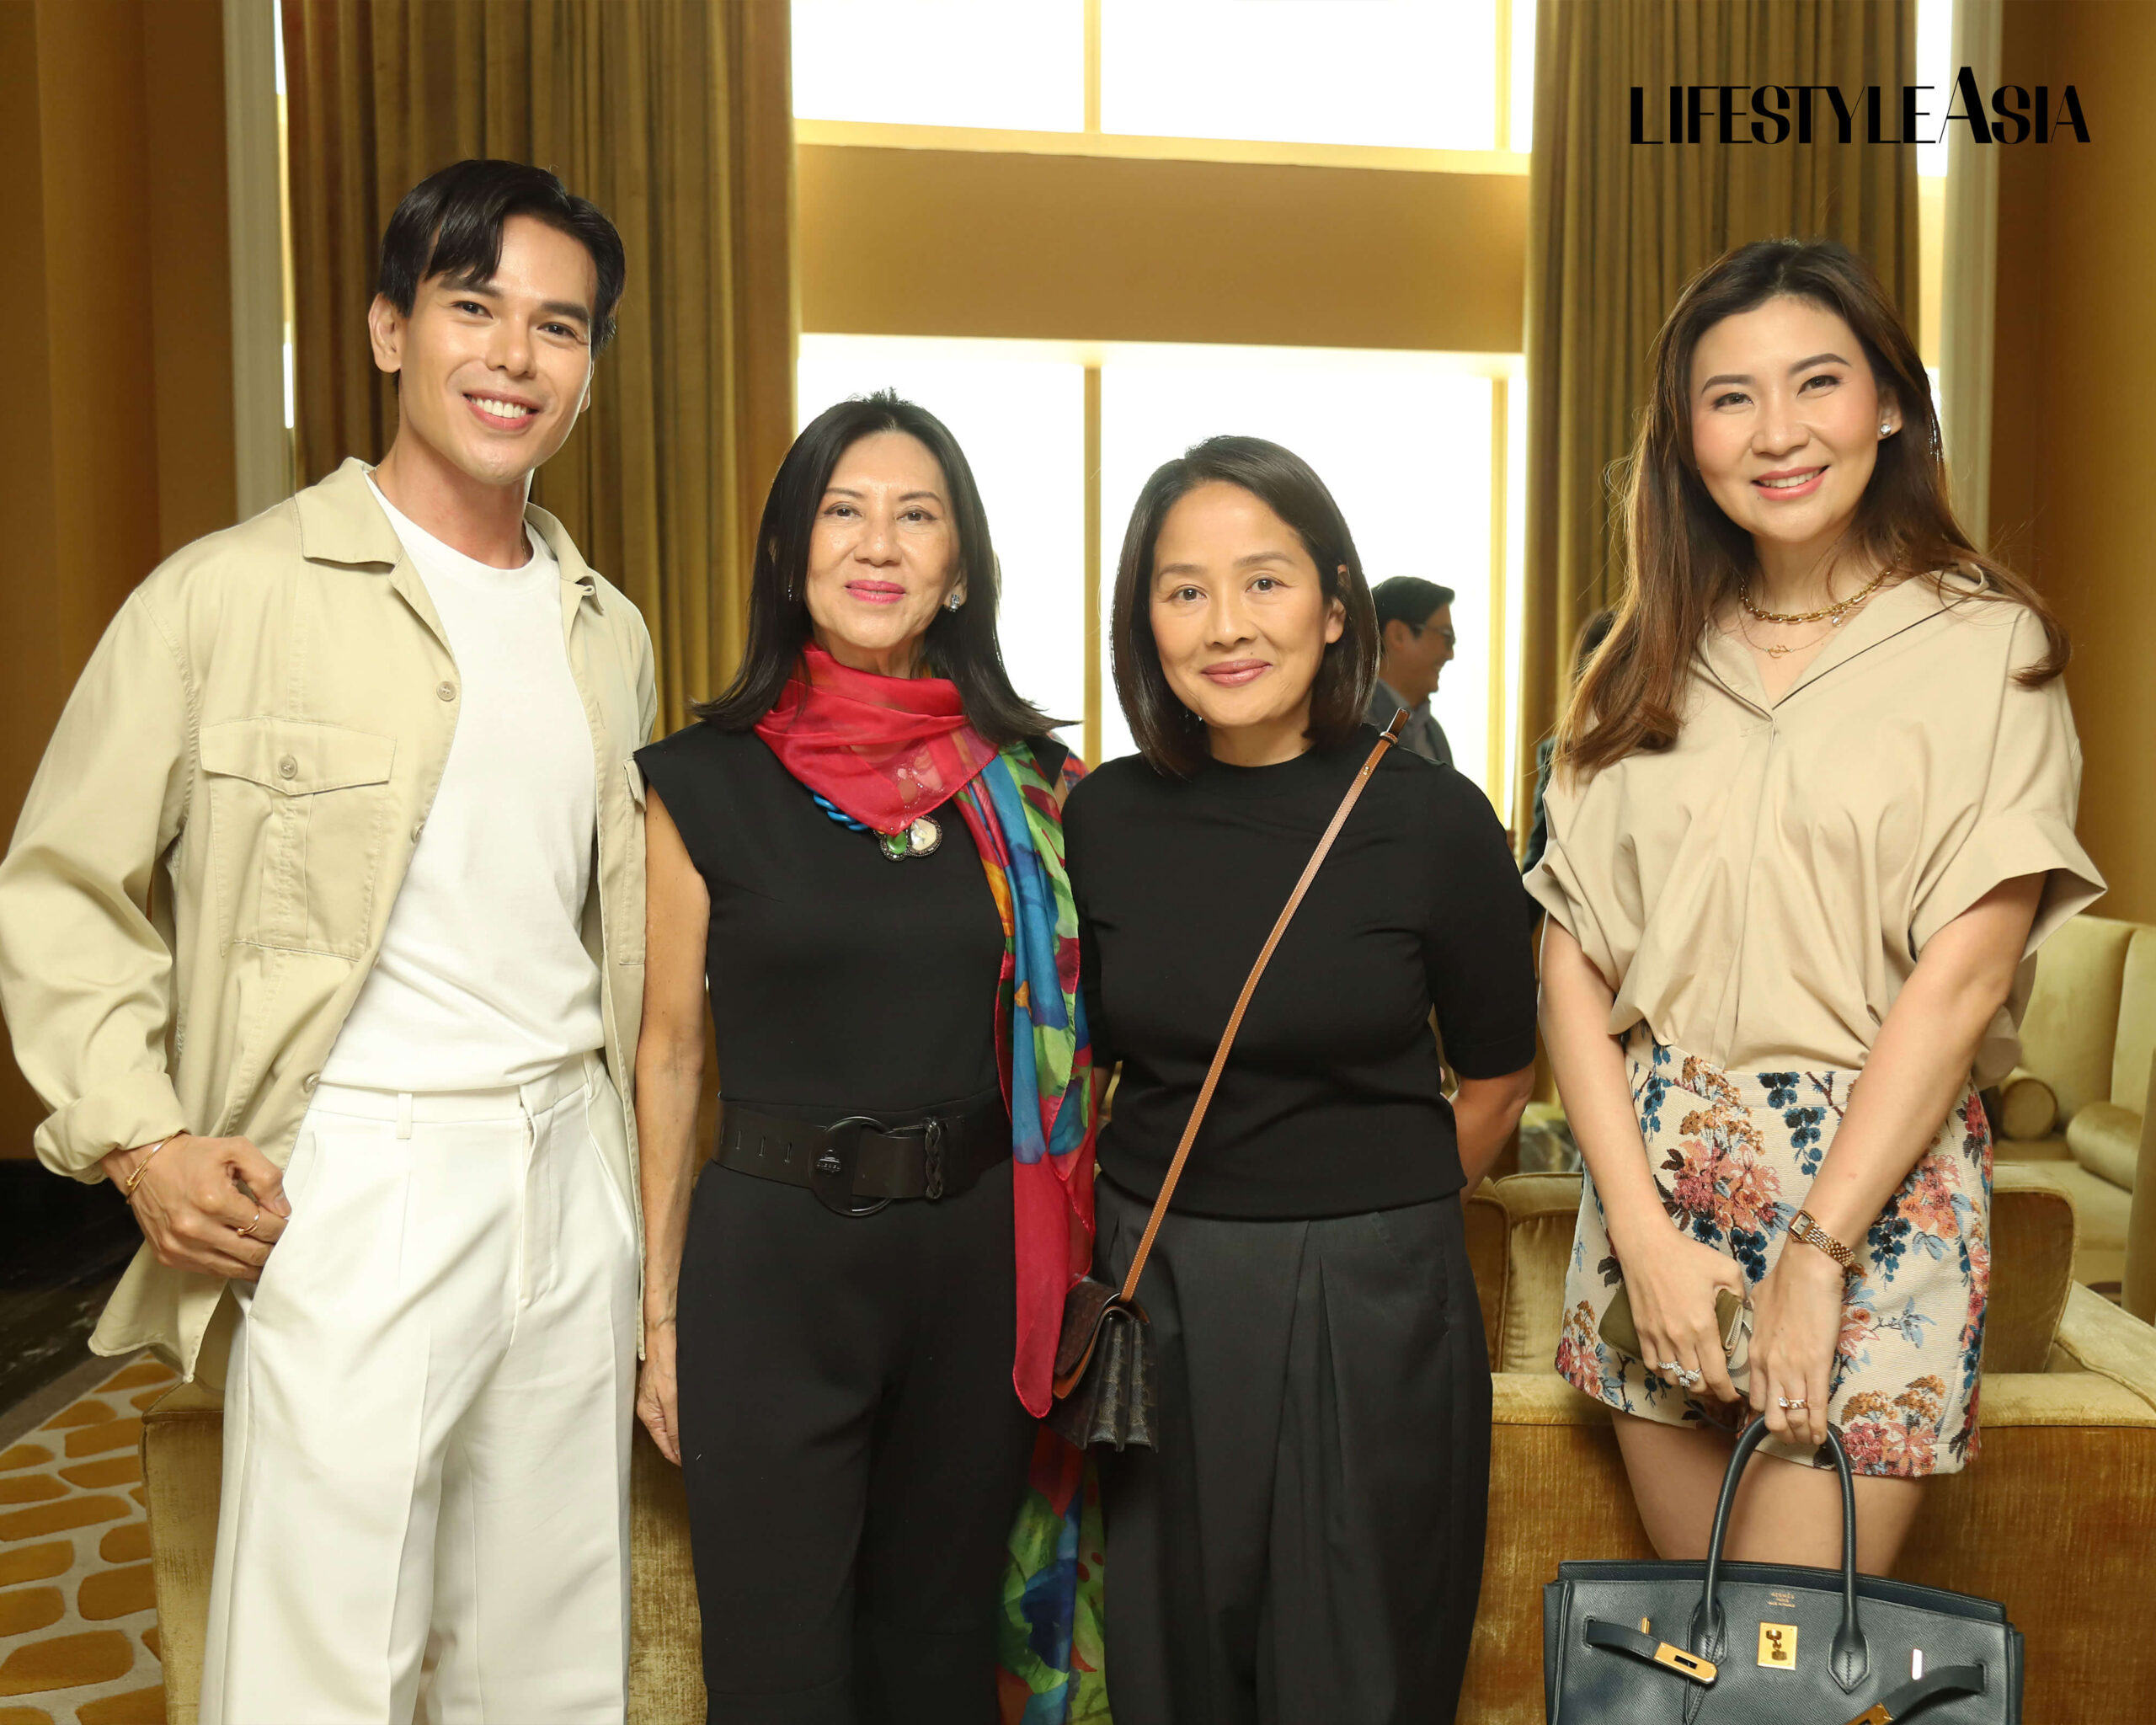 AJ Olpindo, Lulu Tan Gan, Patrice Diaz, and Geraldine Zamora at Lifestyle Asia event